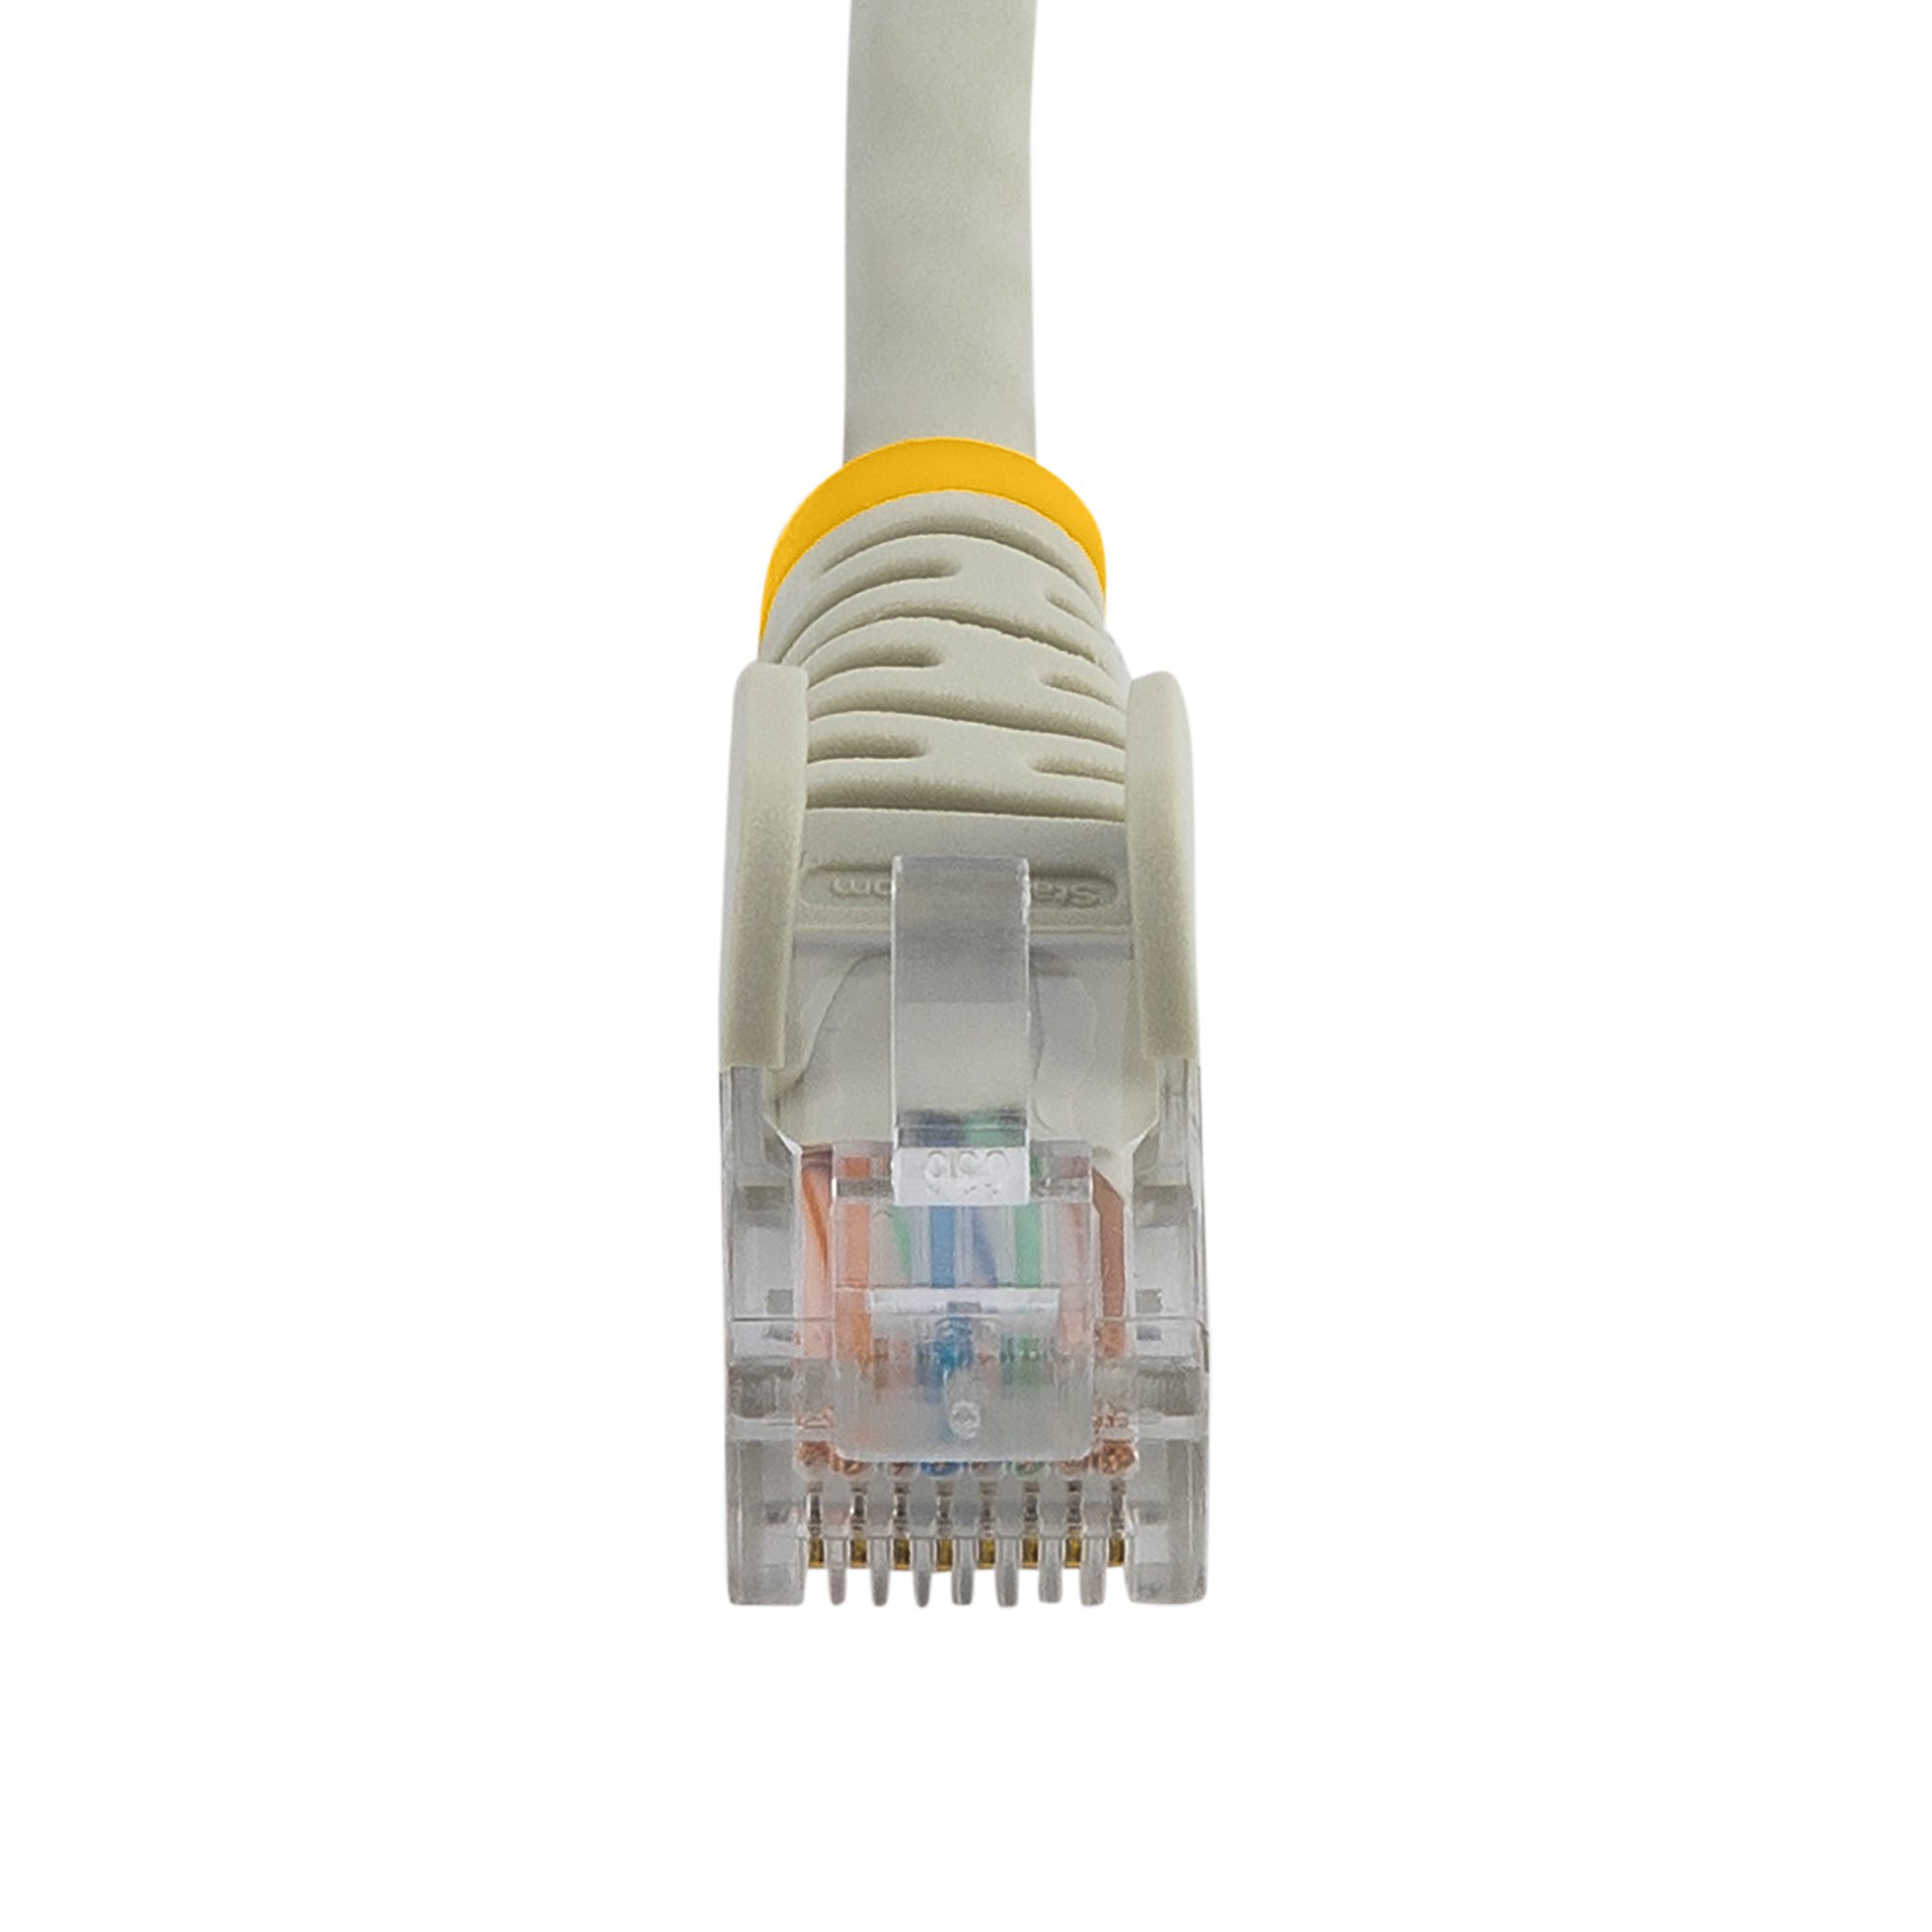 StarTech.com 0,5m Cat5e Ethernet Netzwerkkabel Snagless mit RJ45 - Cat 5e UTP Kabel - Grau - Patch-Kabel - RJ-45 (M)